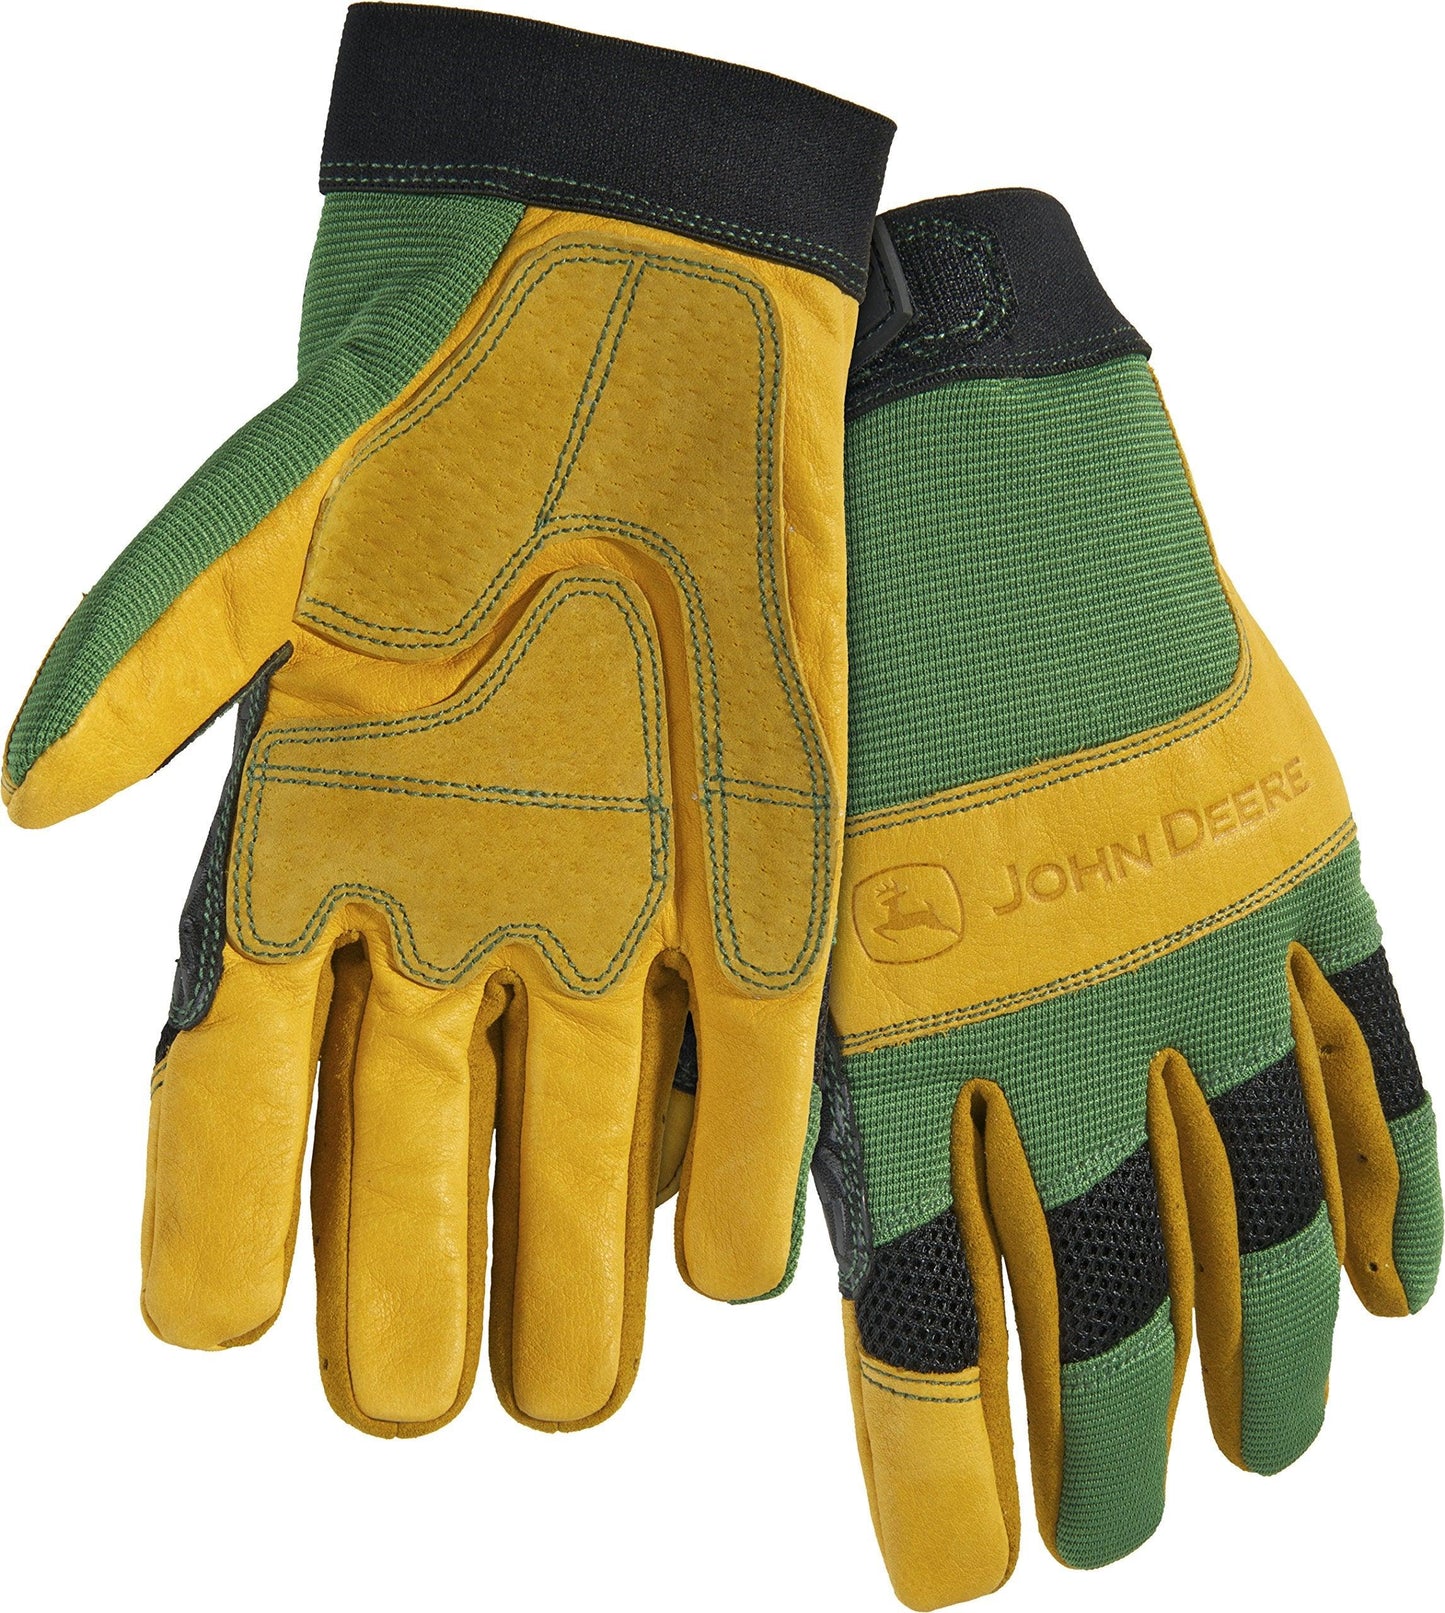 Men's John Deere Cowhide Work Gloves with Spandex Back (Green/Tan)(2XL) - LP47143